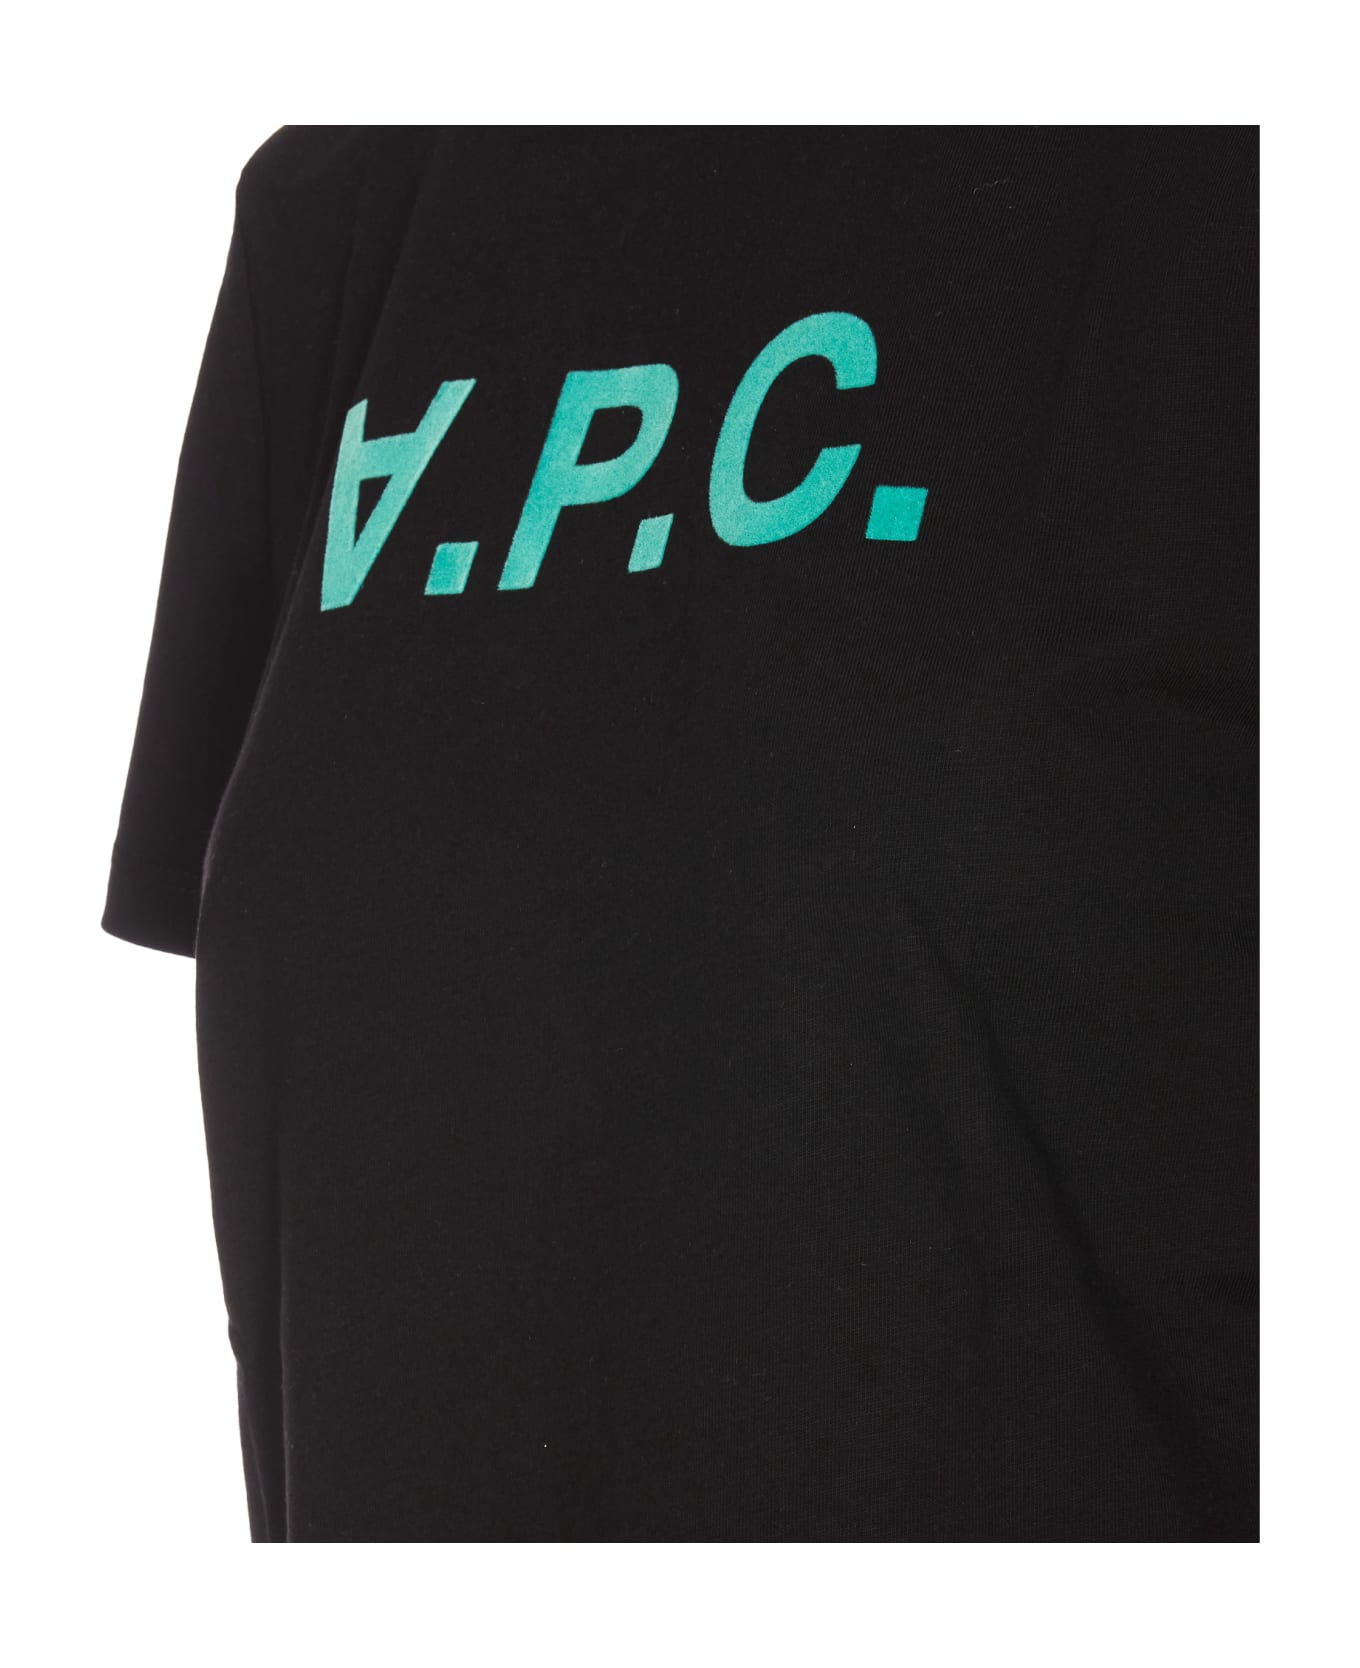 A.P.C. Logo T-shirt - Black Tシャツ